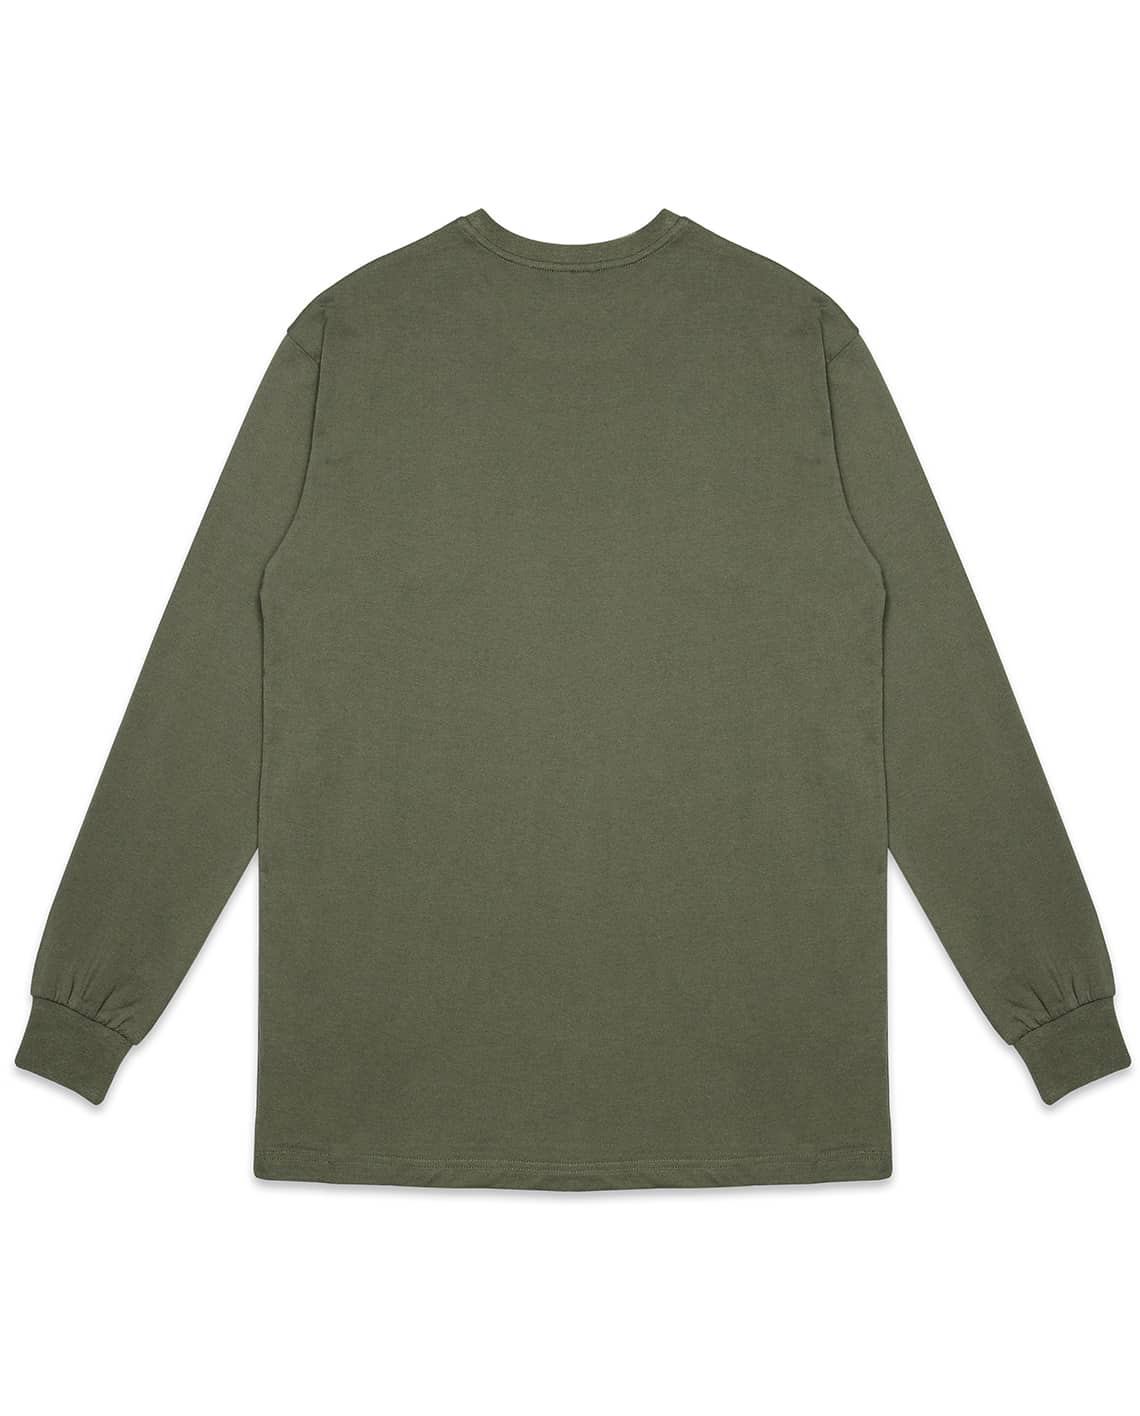 EST.11 Sage Long Sleeve T-Shirt XXL / Sage